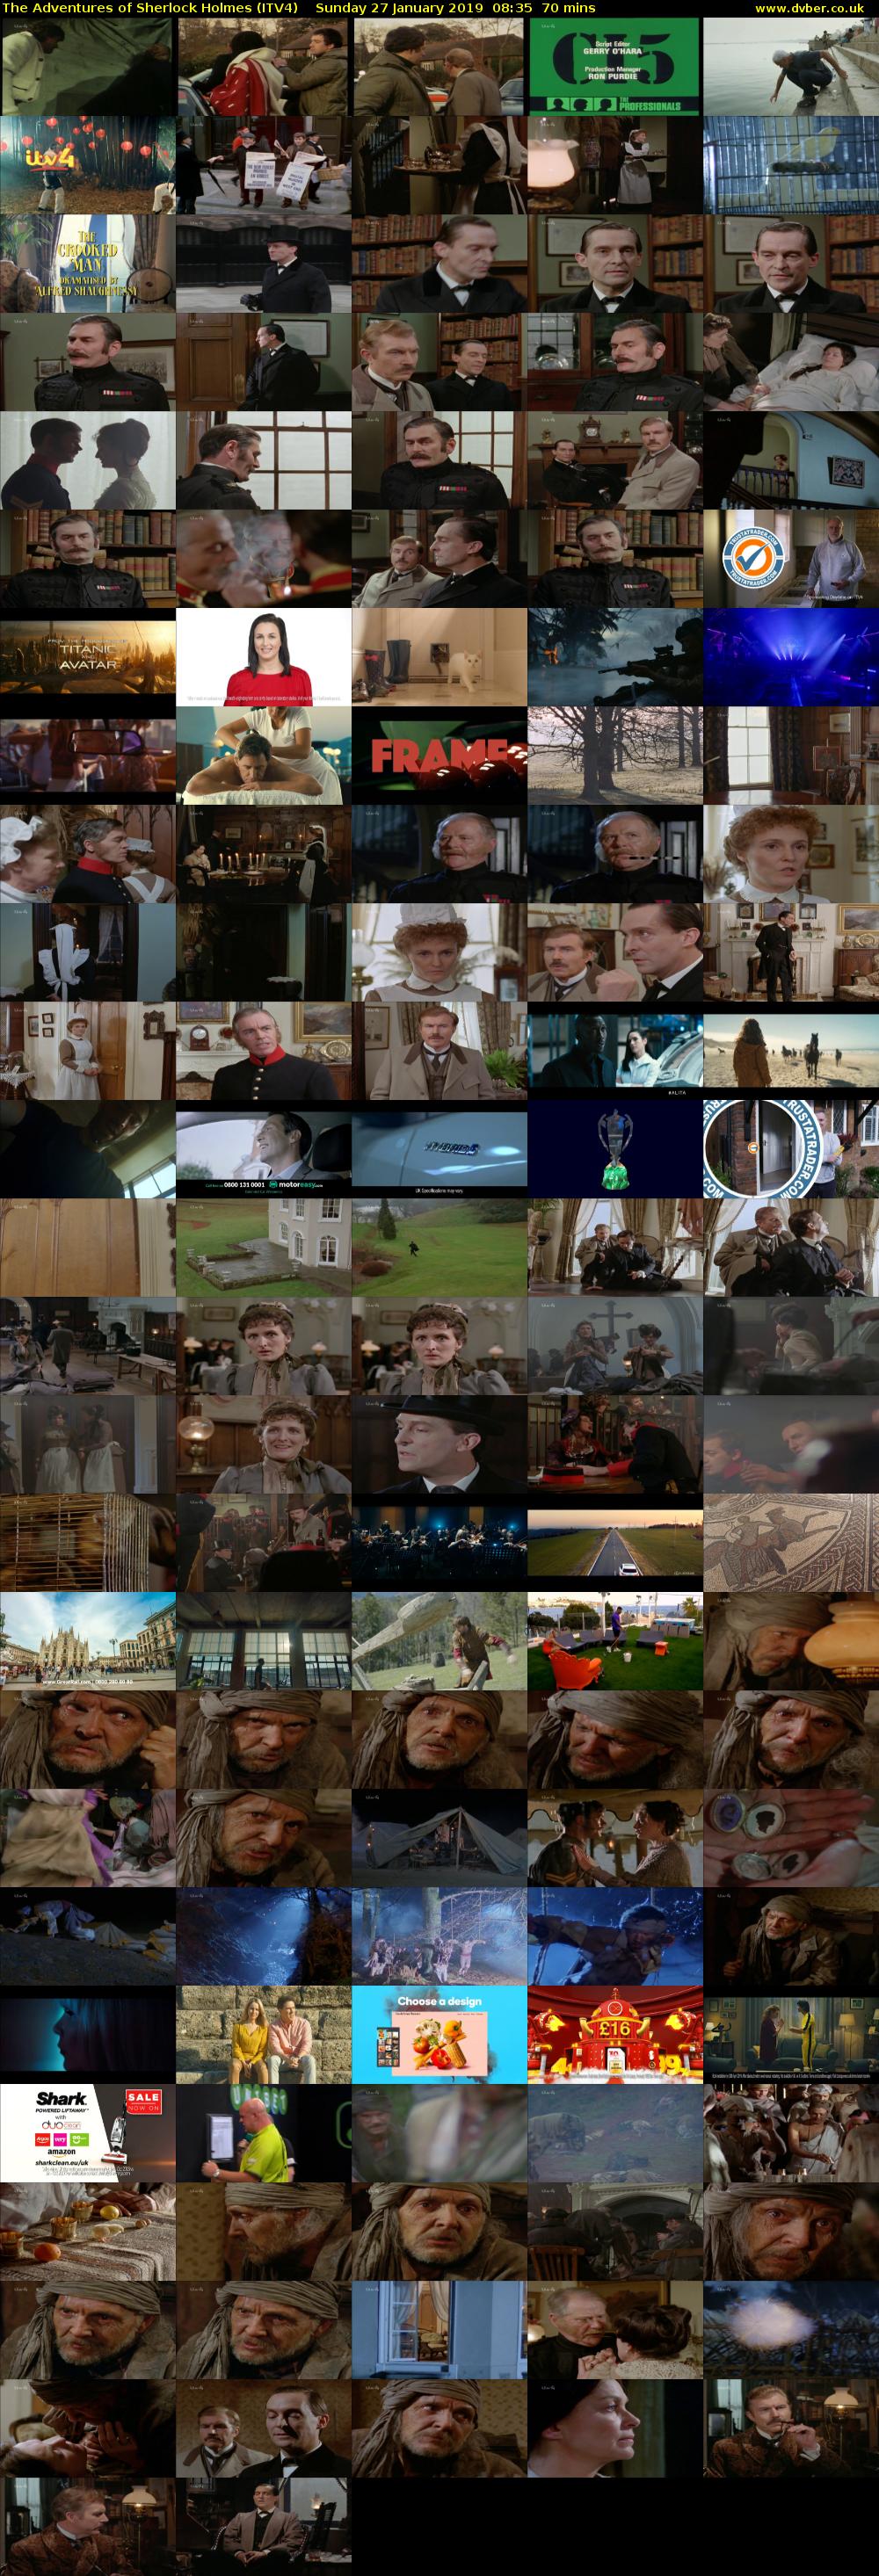 The Adventures of Sherlock Holmes (ITV4) Sunday 27 January 2019 08:35 - 09:45